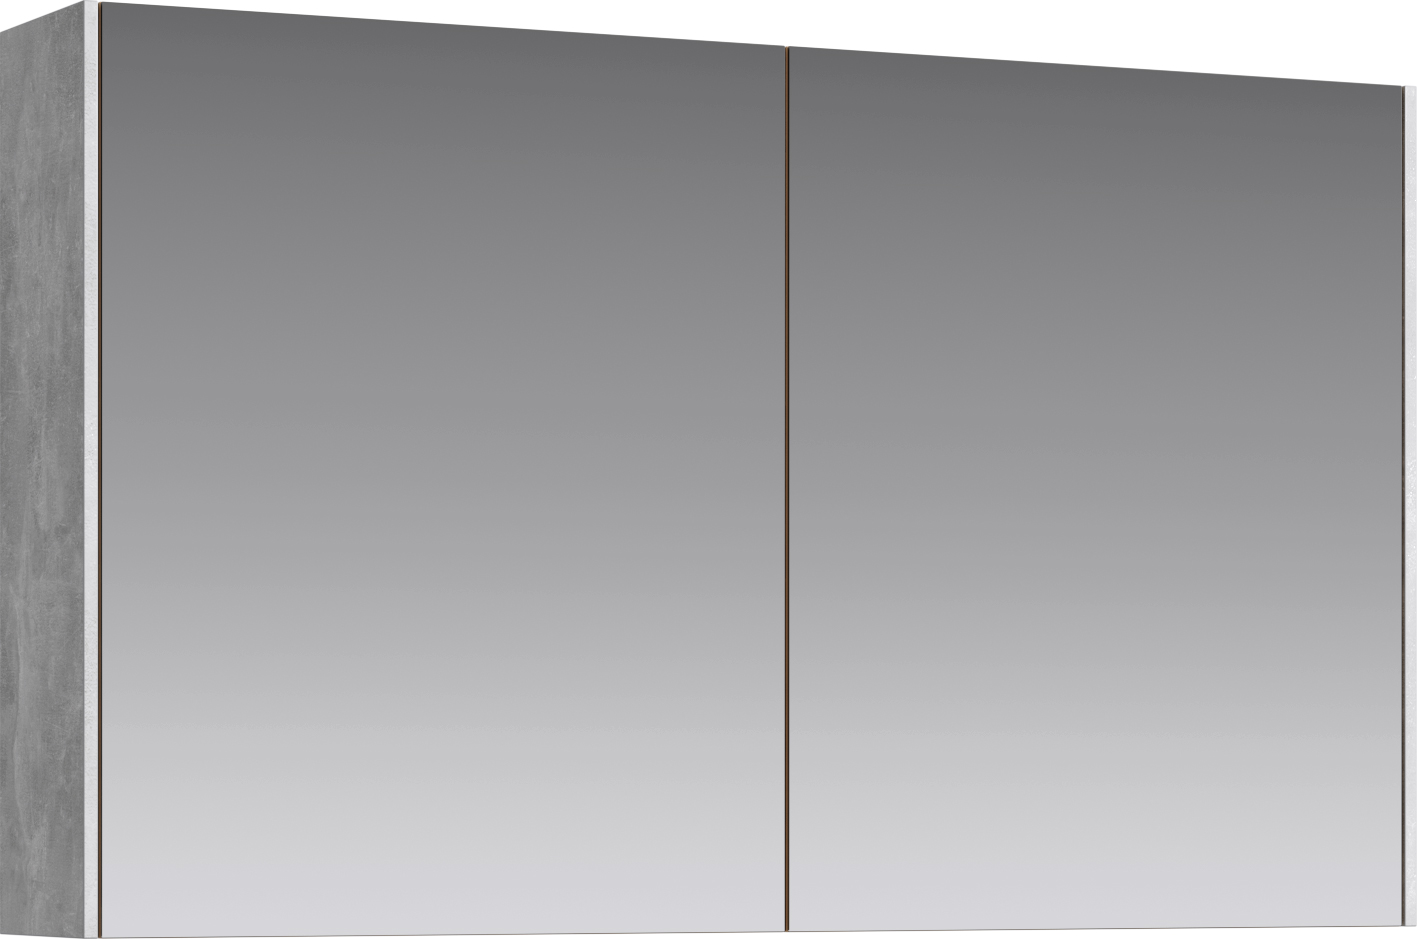 Сменный элемент Aqwella 5 stars Mobi для зеркала-шкафа, бетон светлый, 2 шт.